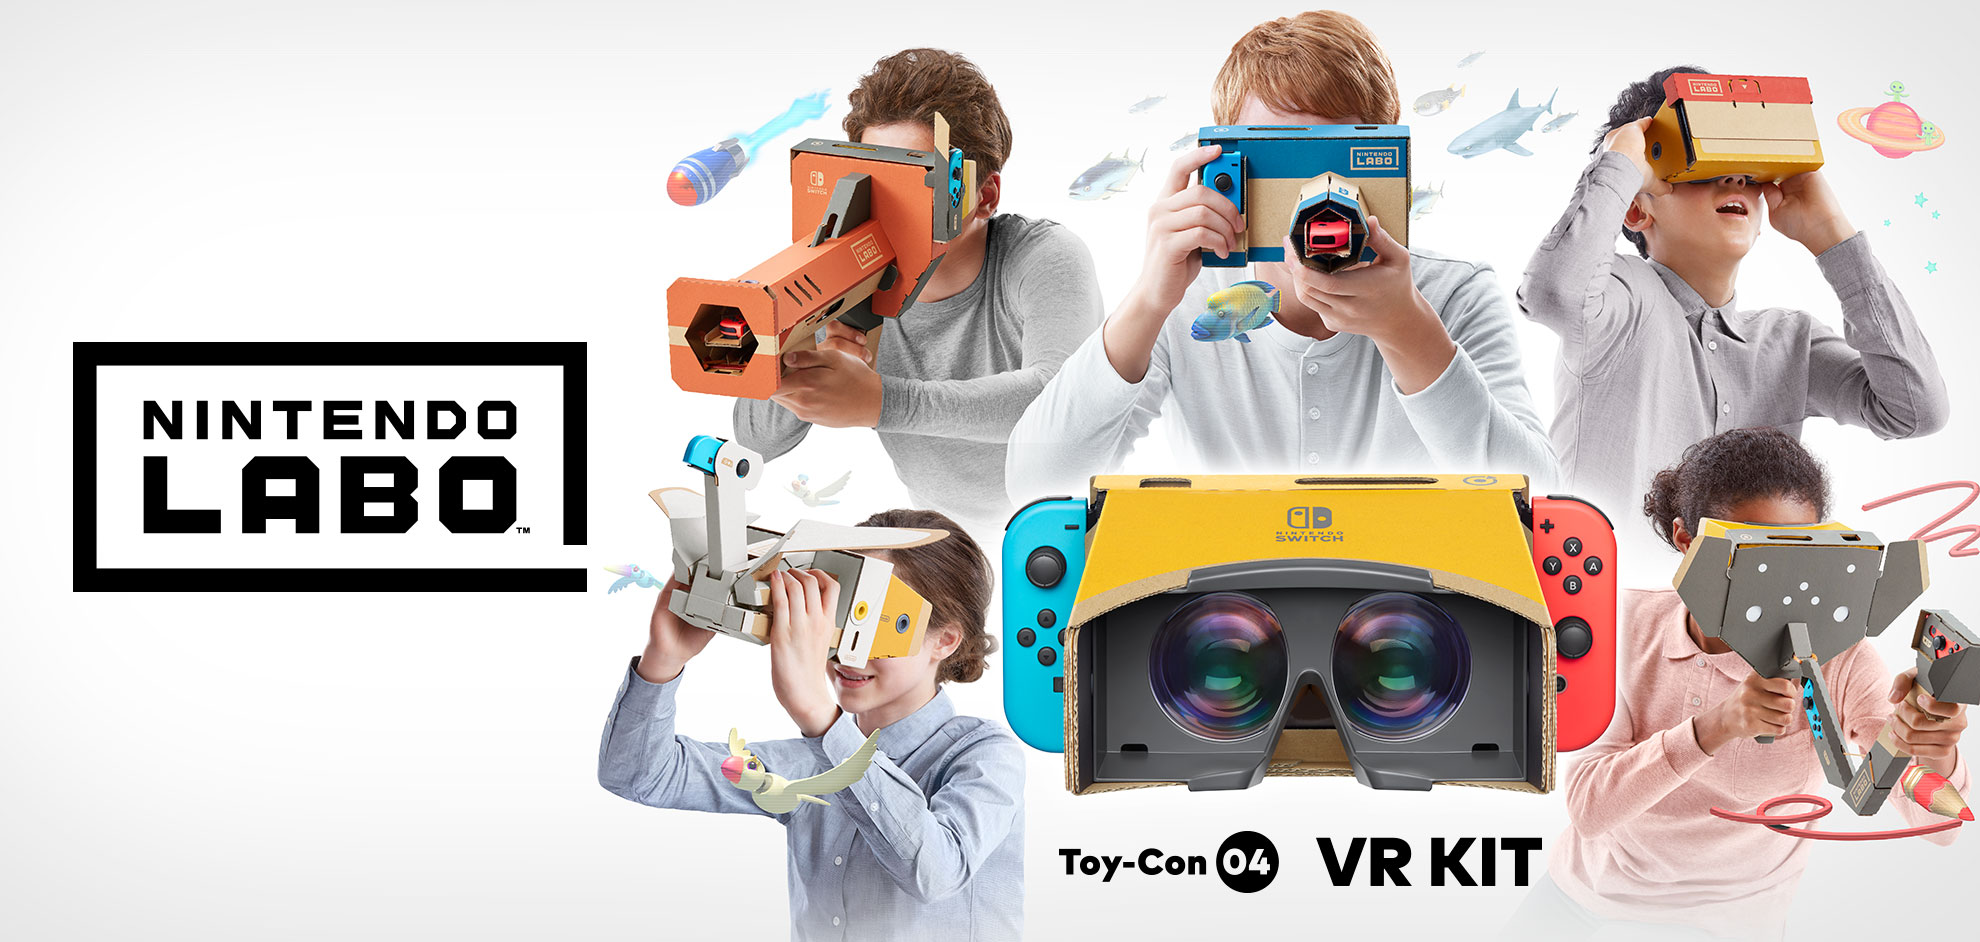 Nintendo Labo™ Toy-Con 04: VR Kit